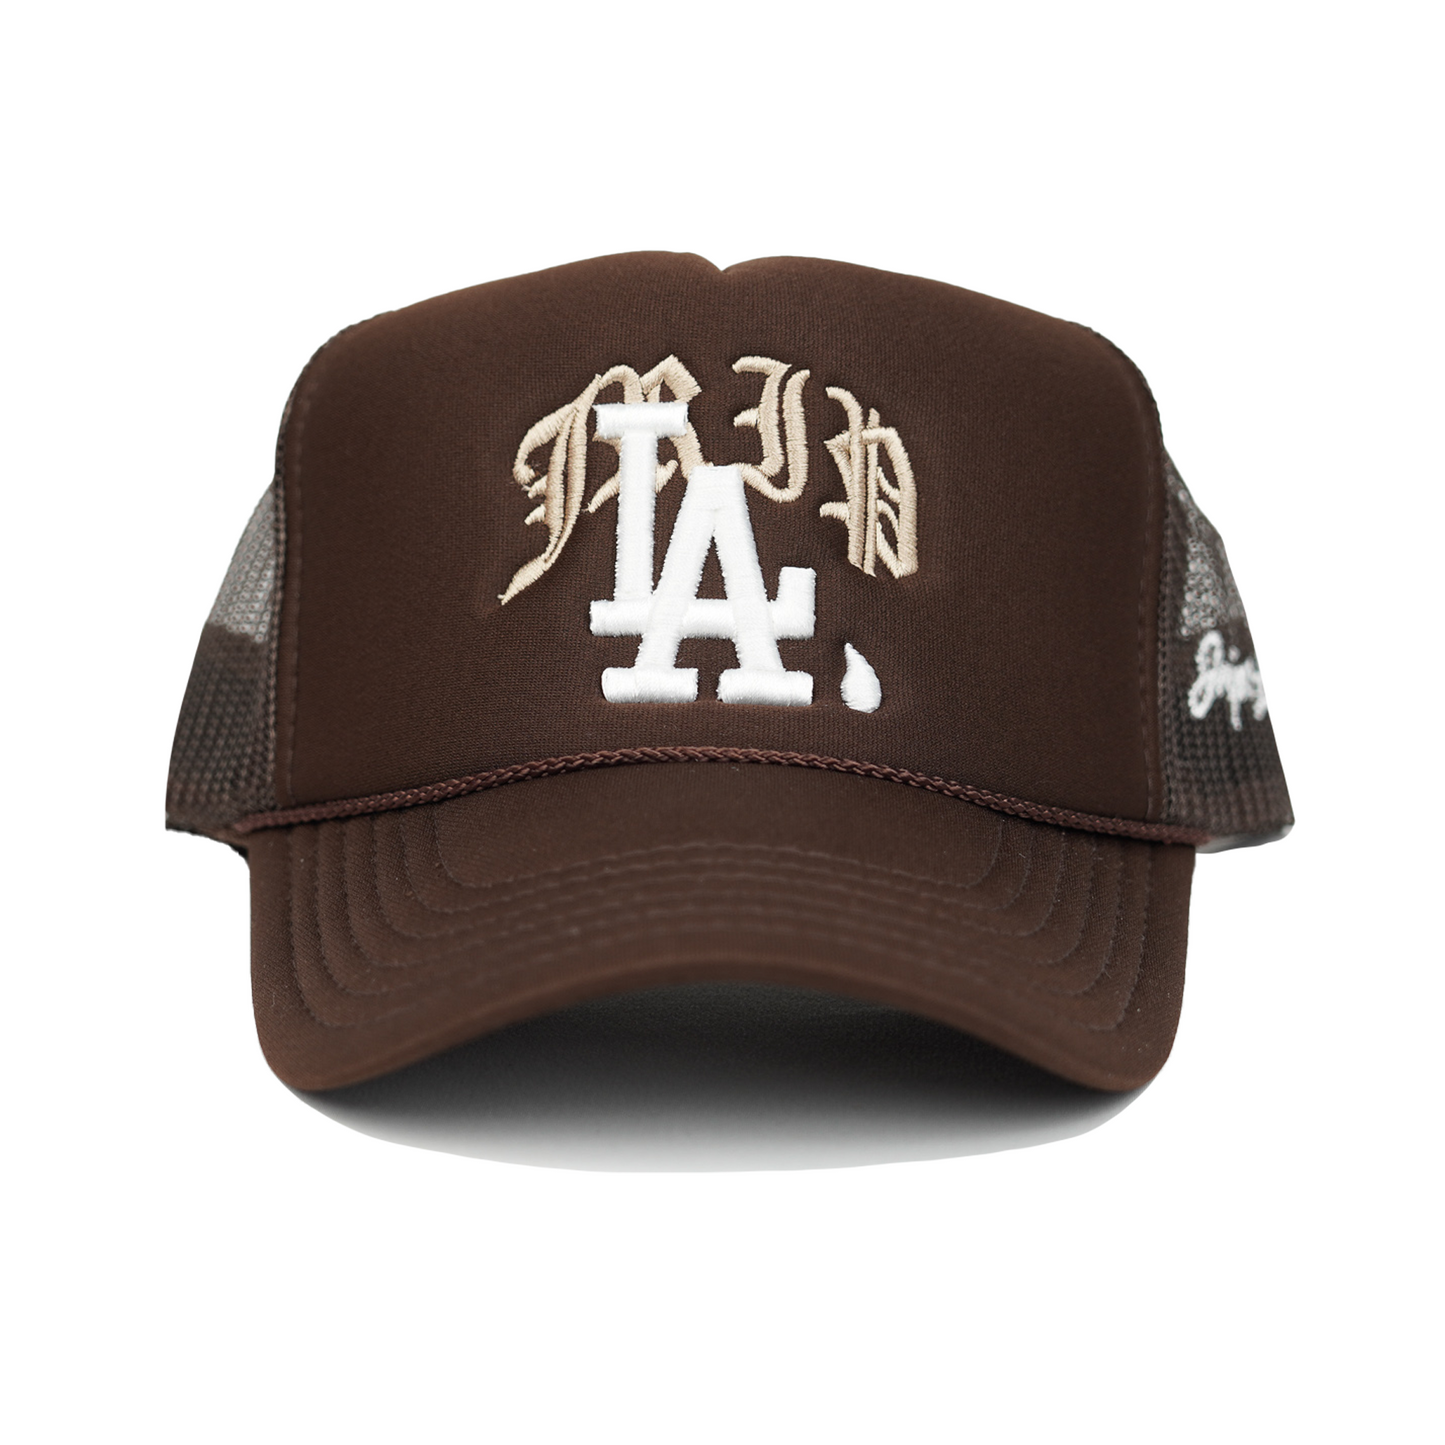 Jrip LA Trucker Hat (BROWN)